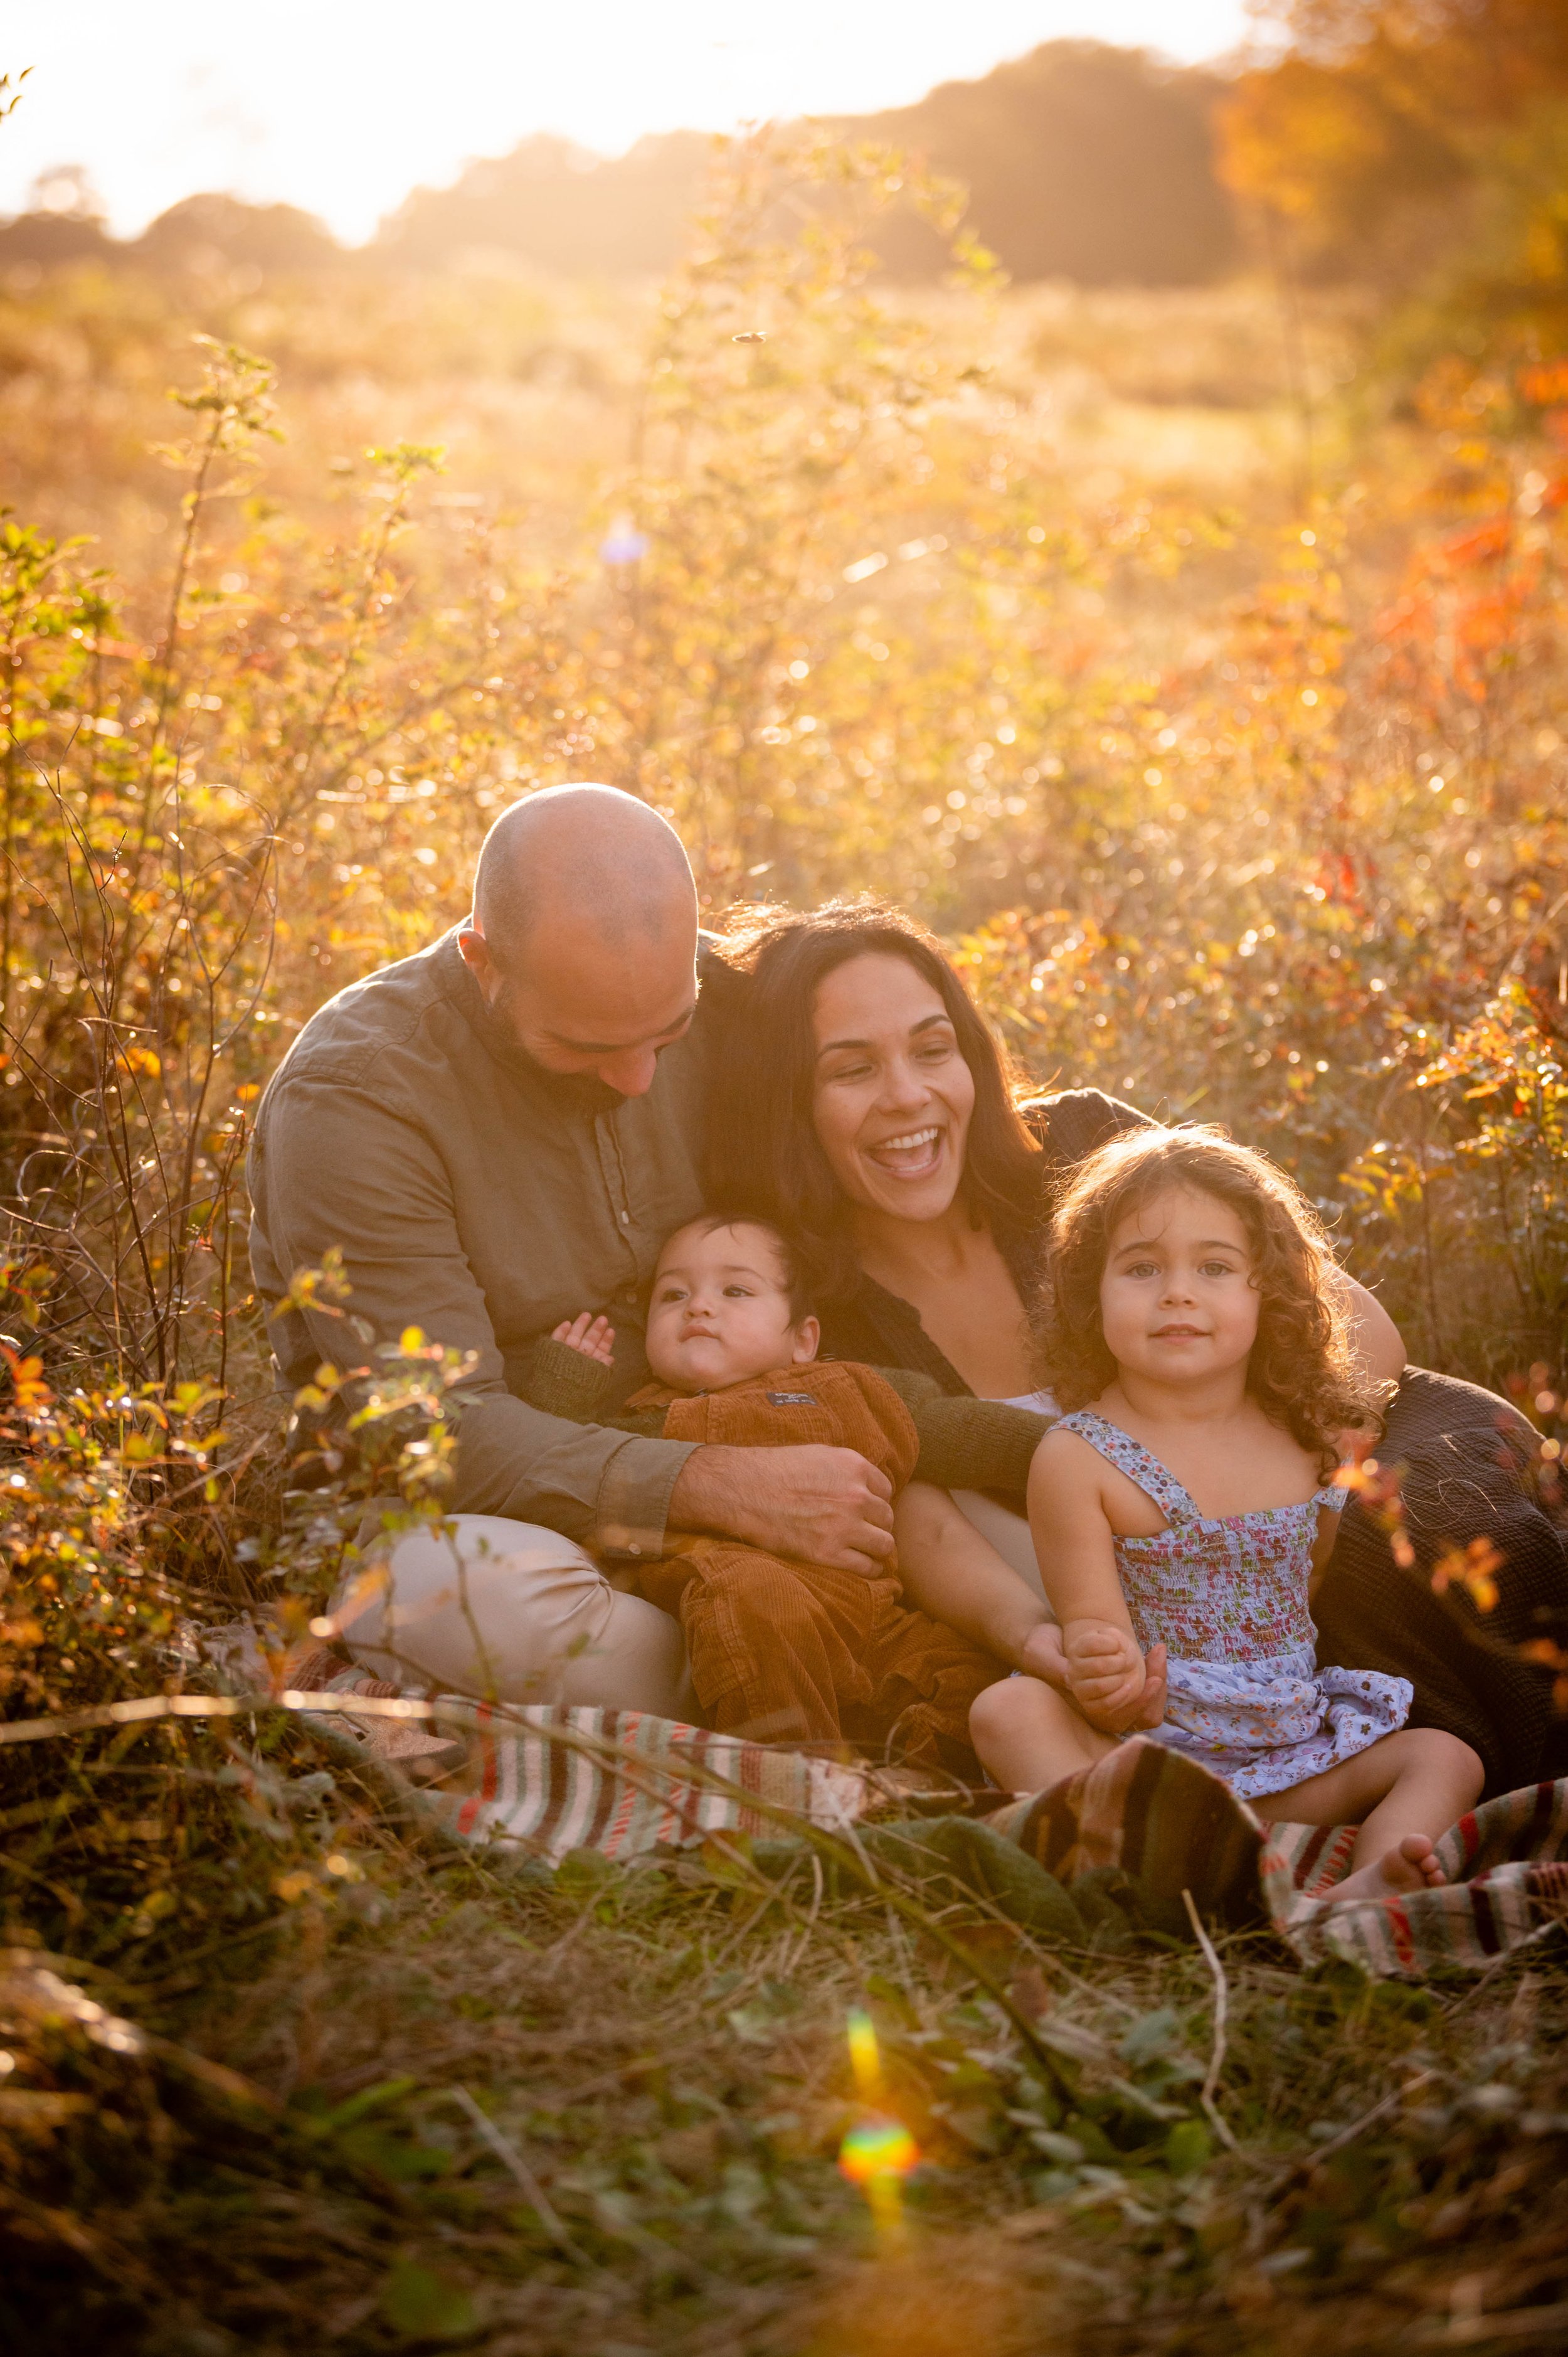 lindsay murphy photography | portland maine family photographer | family cuddling in field golden light.jpg